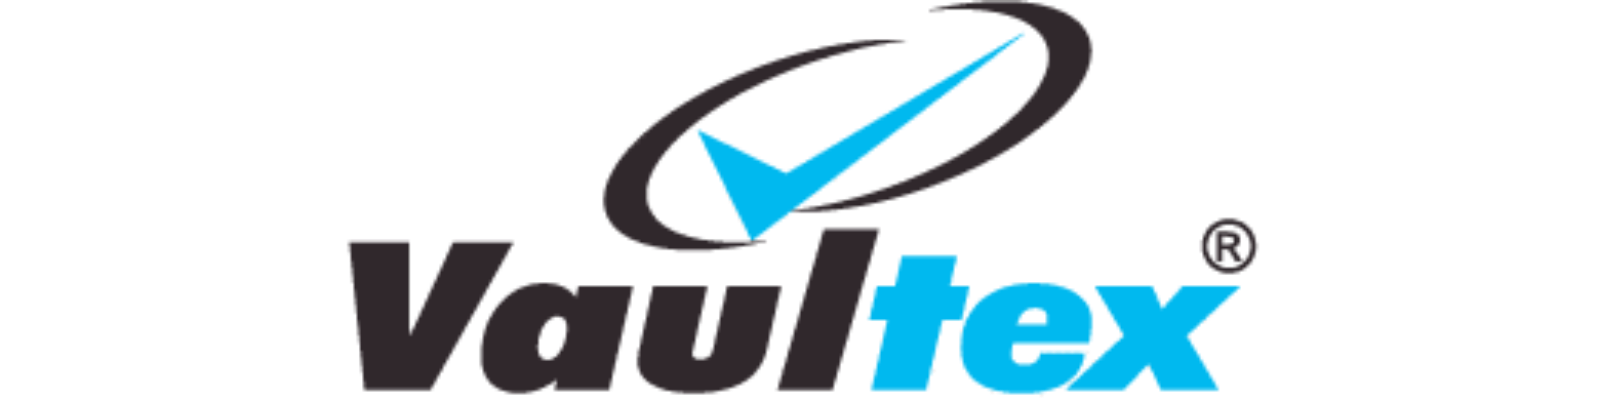 vaultex brand logo of safety products supplier - landmarkcongo sarl